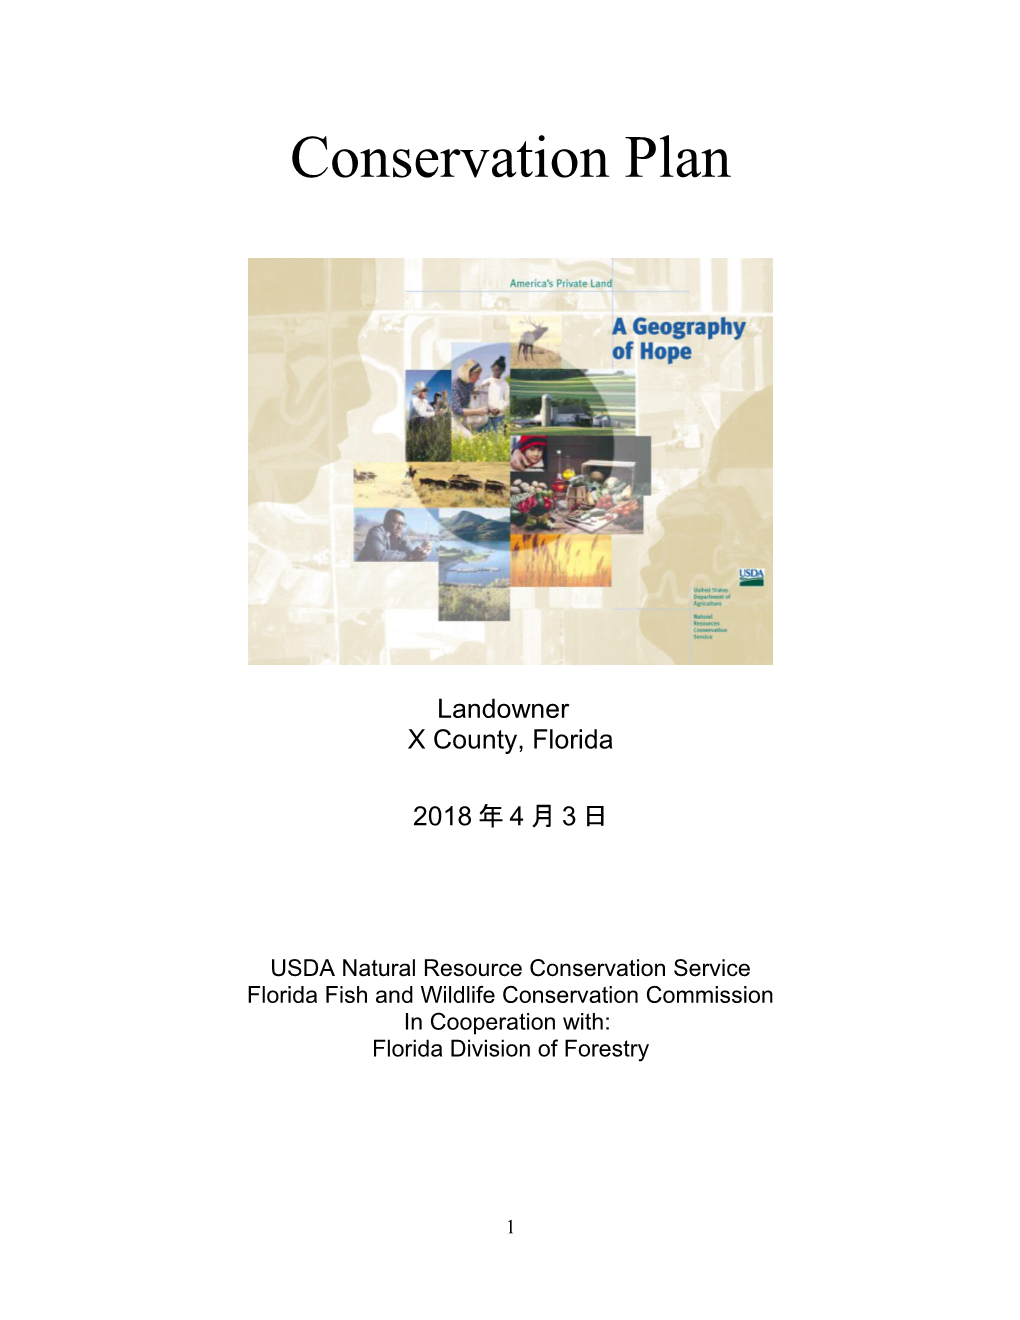 Wildlife Habitat Development Plan (WHDP) for The